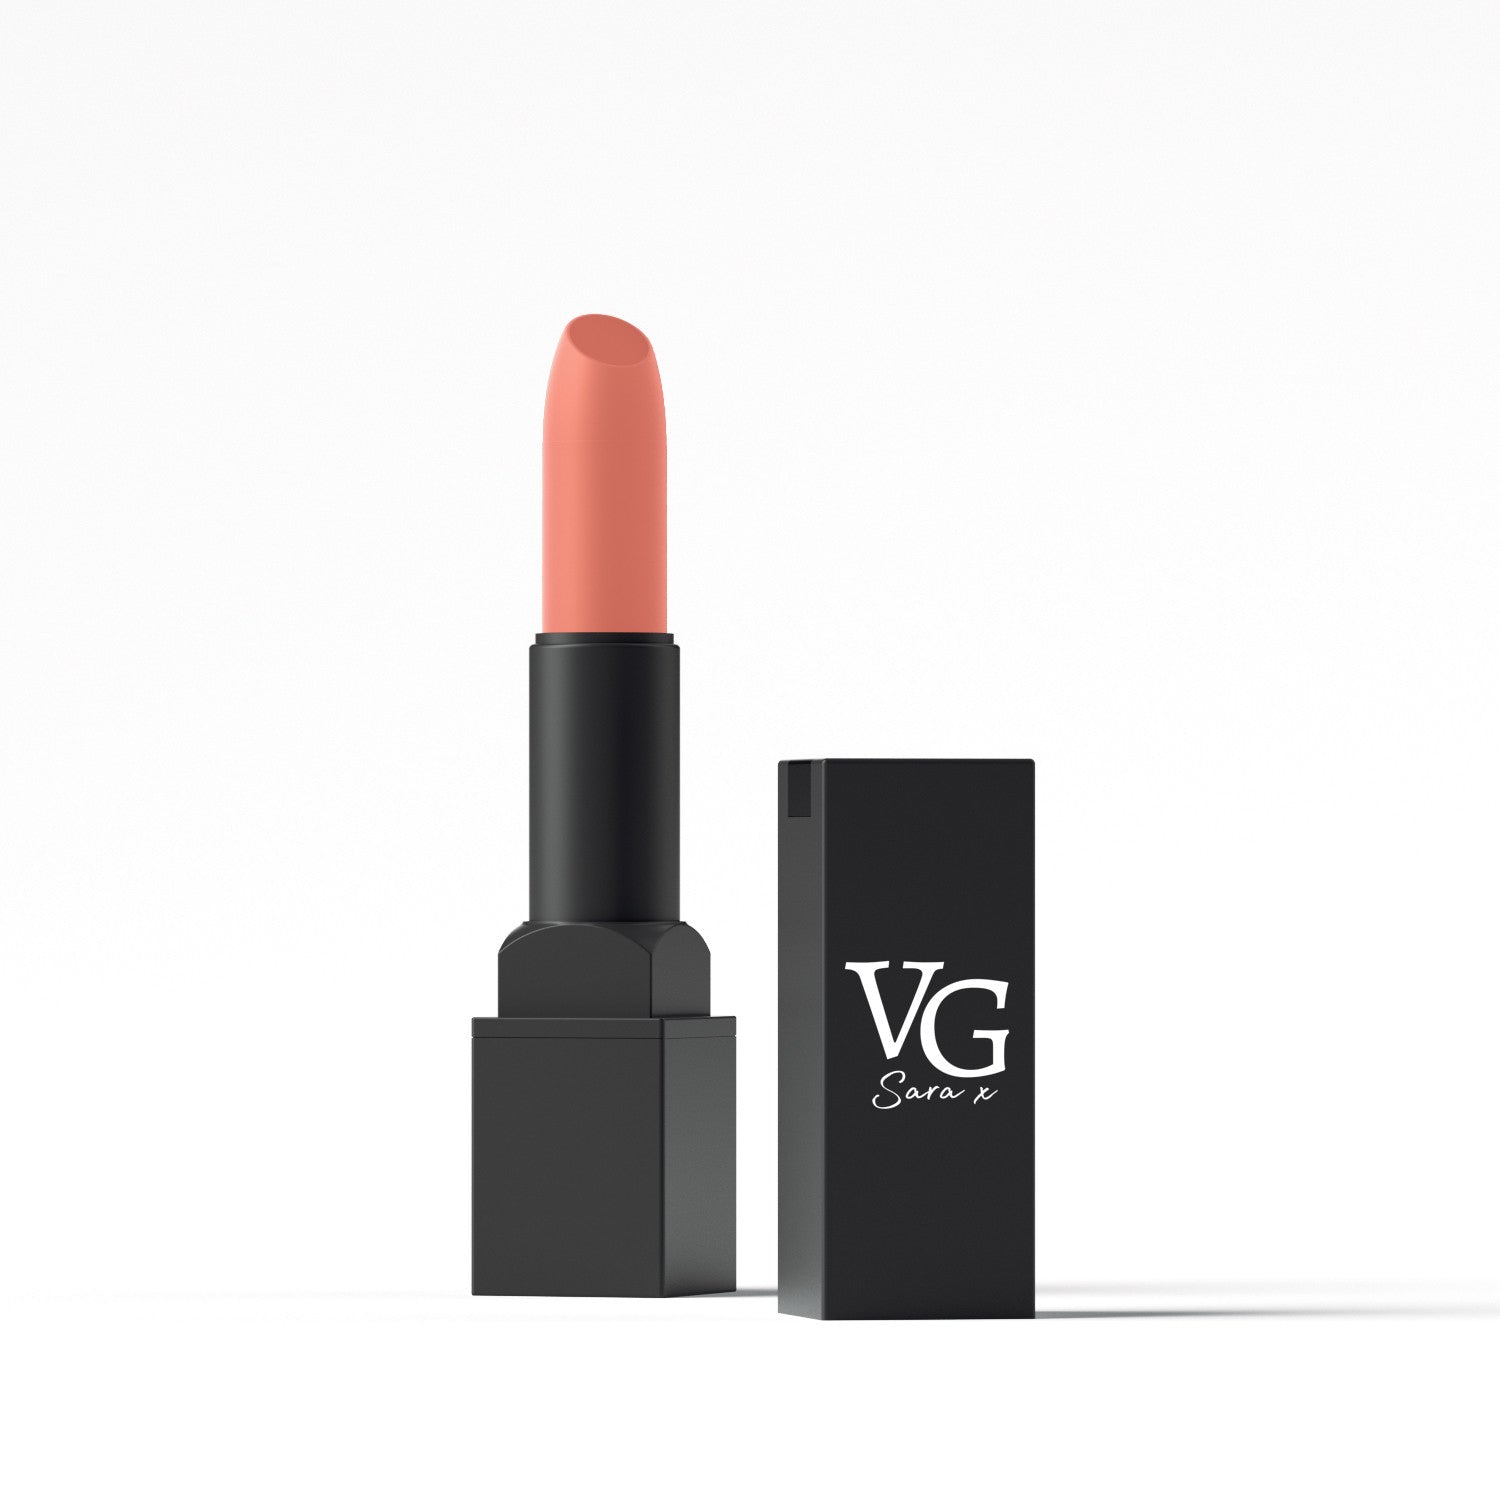 VG lipstick showcasing its creamy texture